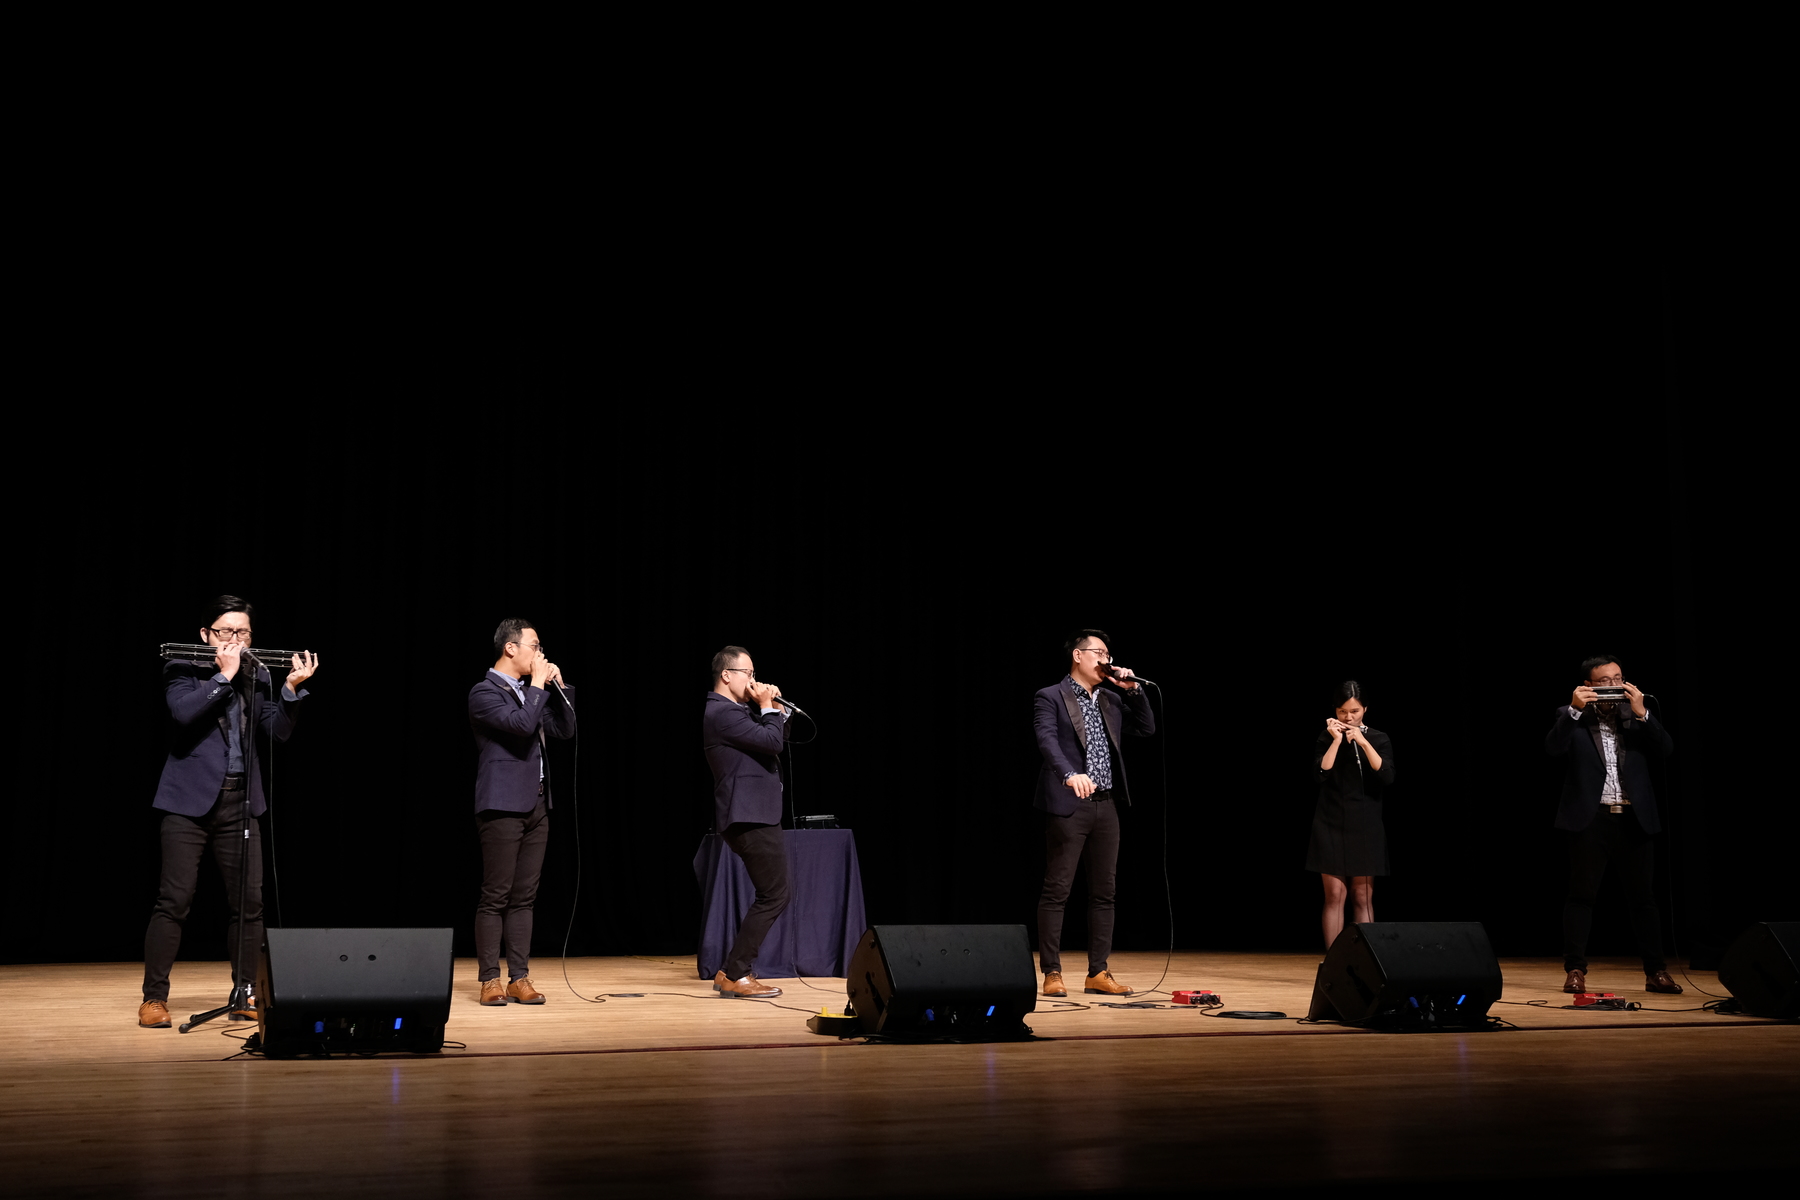 Sirius Harmonica Ensemble performing “Felt Notes On My Lips” in Sun Yat-sen Hall